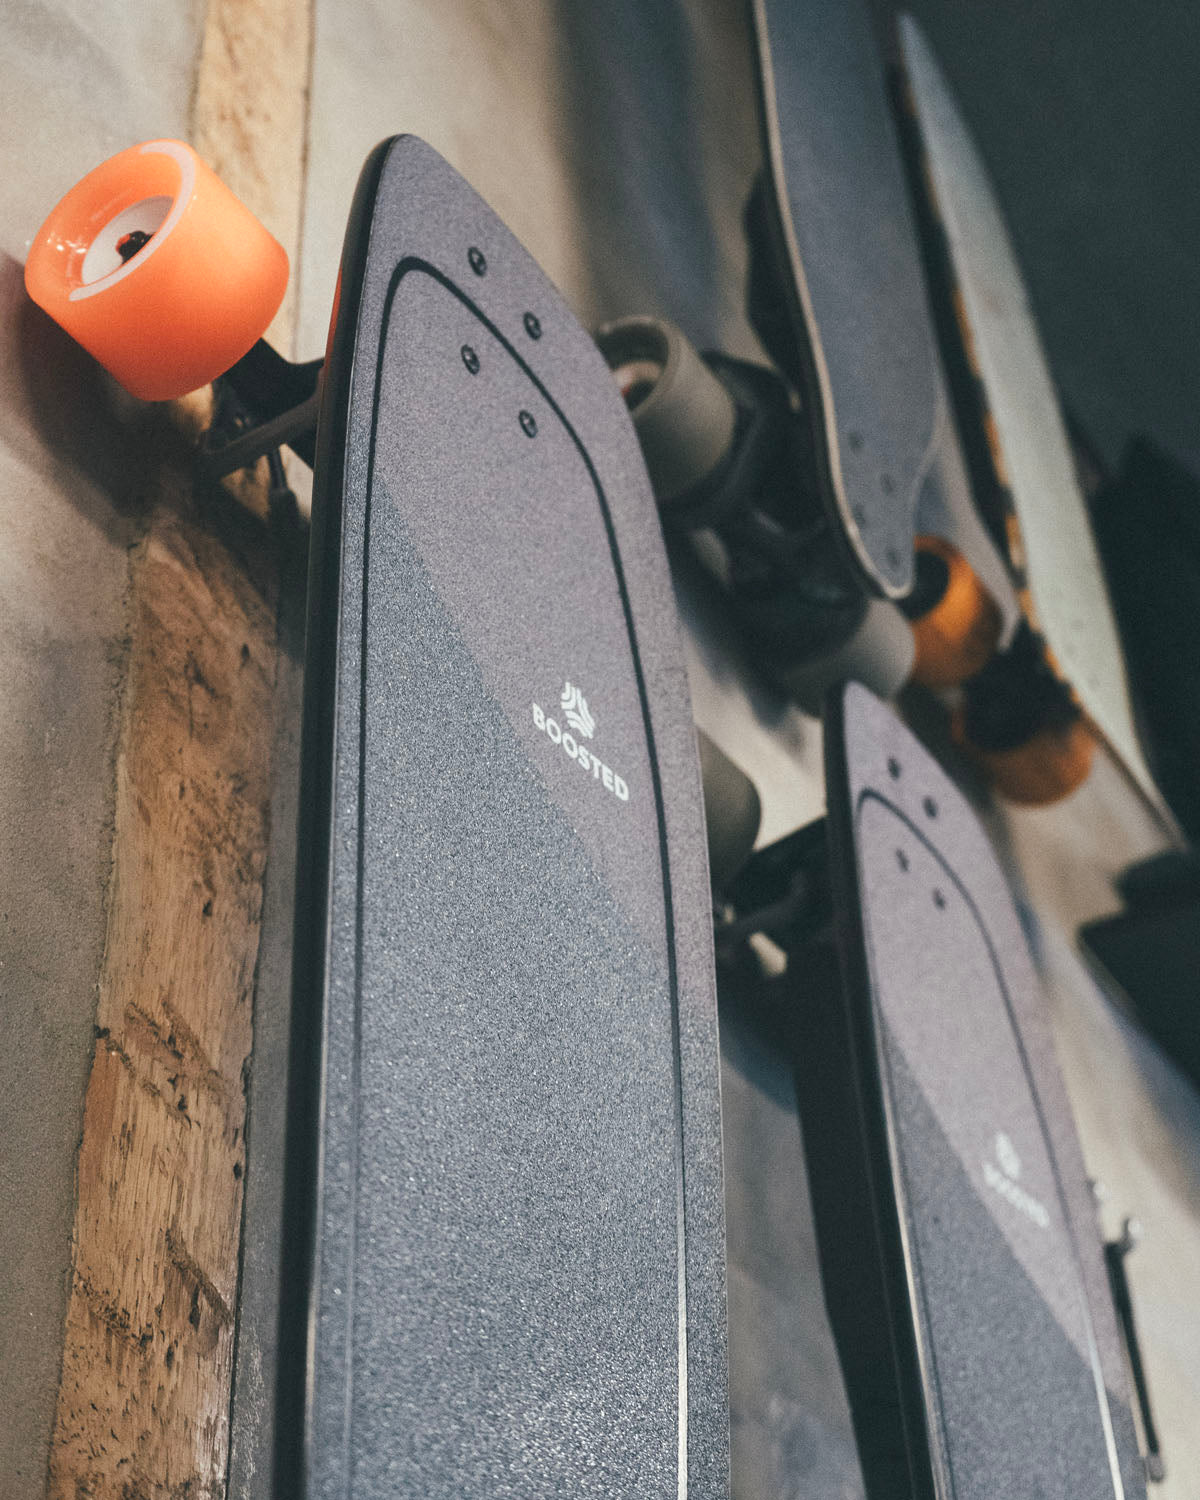 Buy Electric Skateboards in San Francisco or New York City